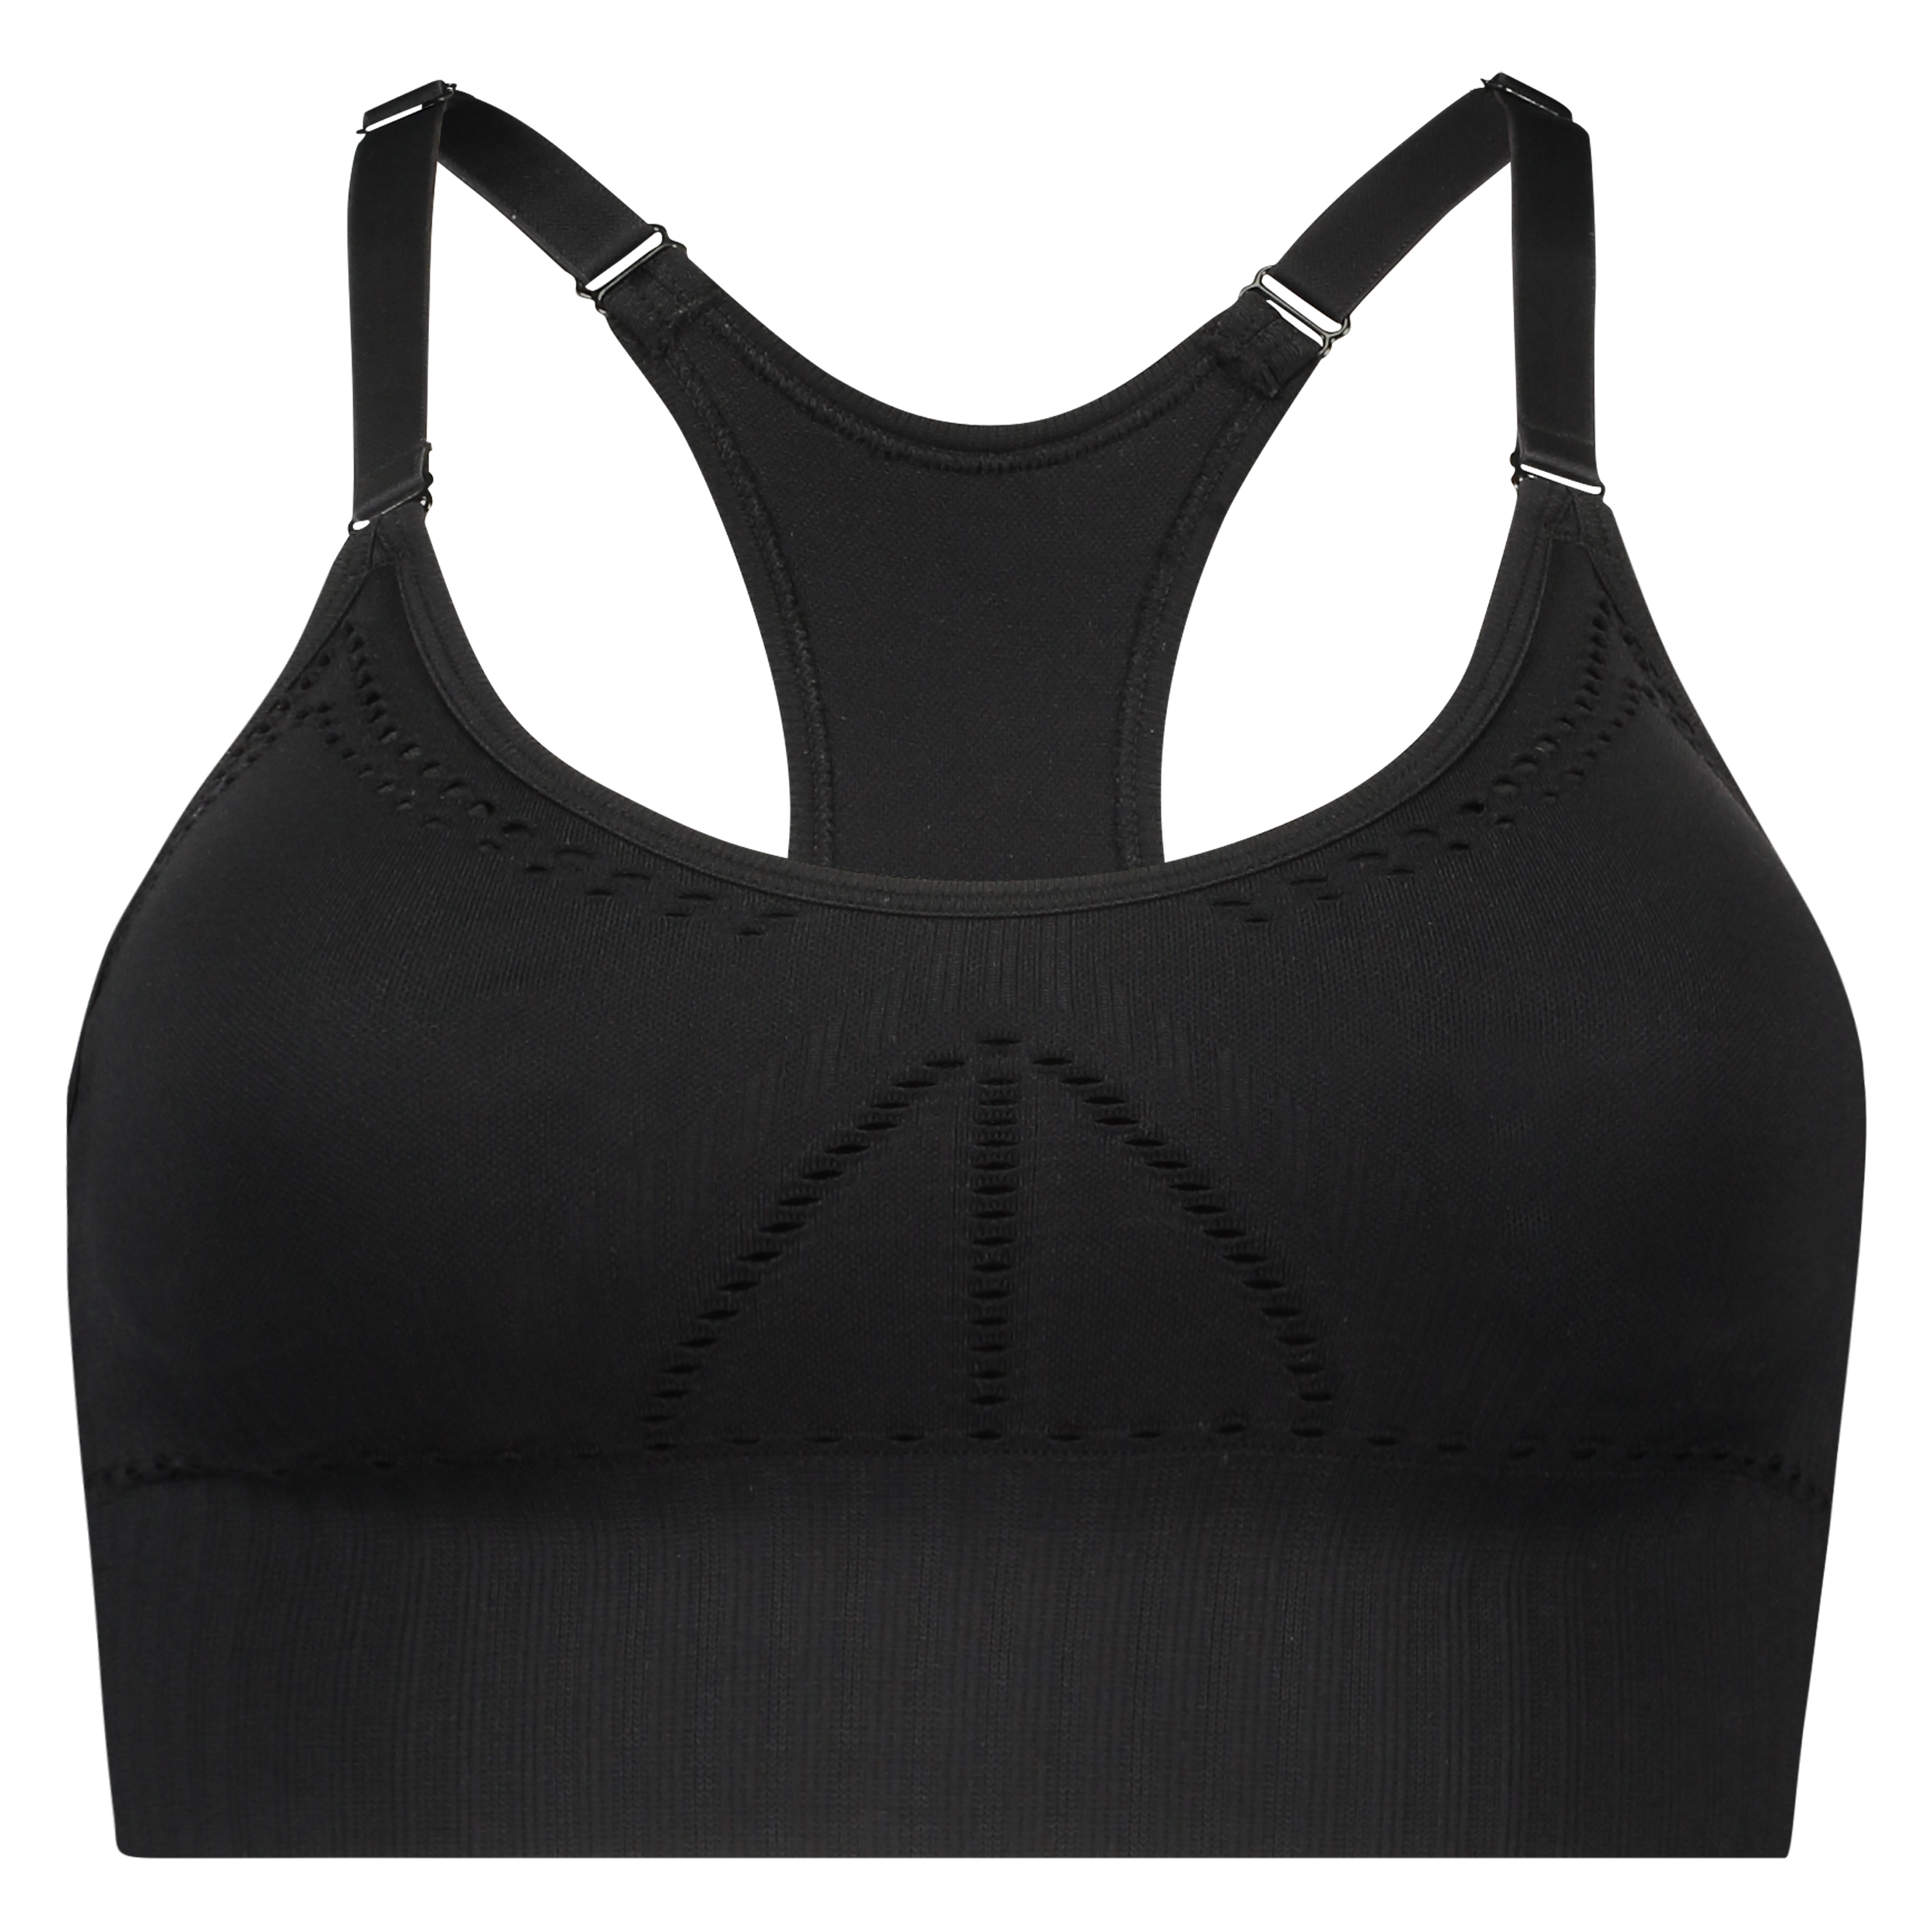 HKMX Sports bra The Comfort Level 1, Black, main